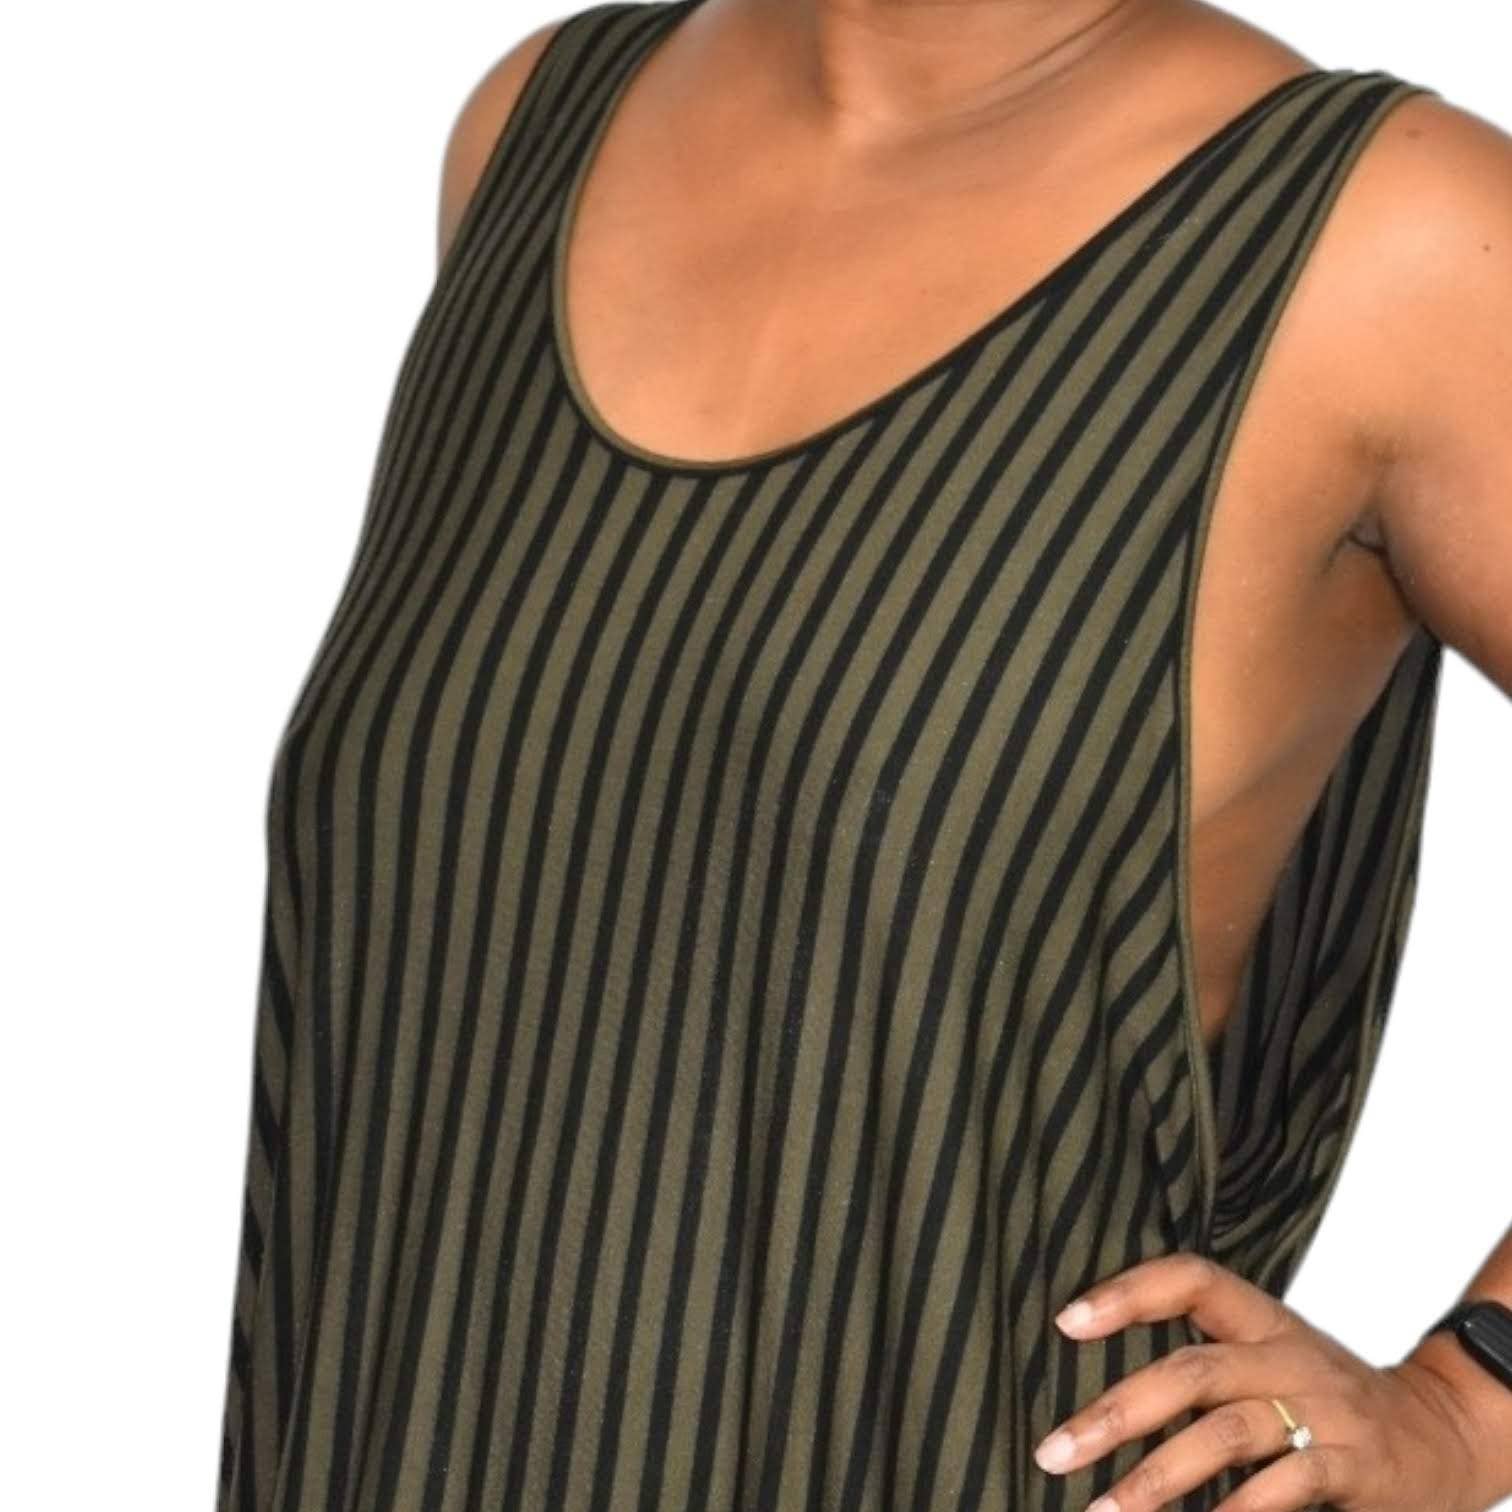 Comfy USA Jumper Dress Green Bubble Hem Tunic Draped Striped Jersey Plus Size XL